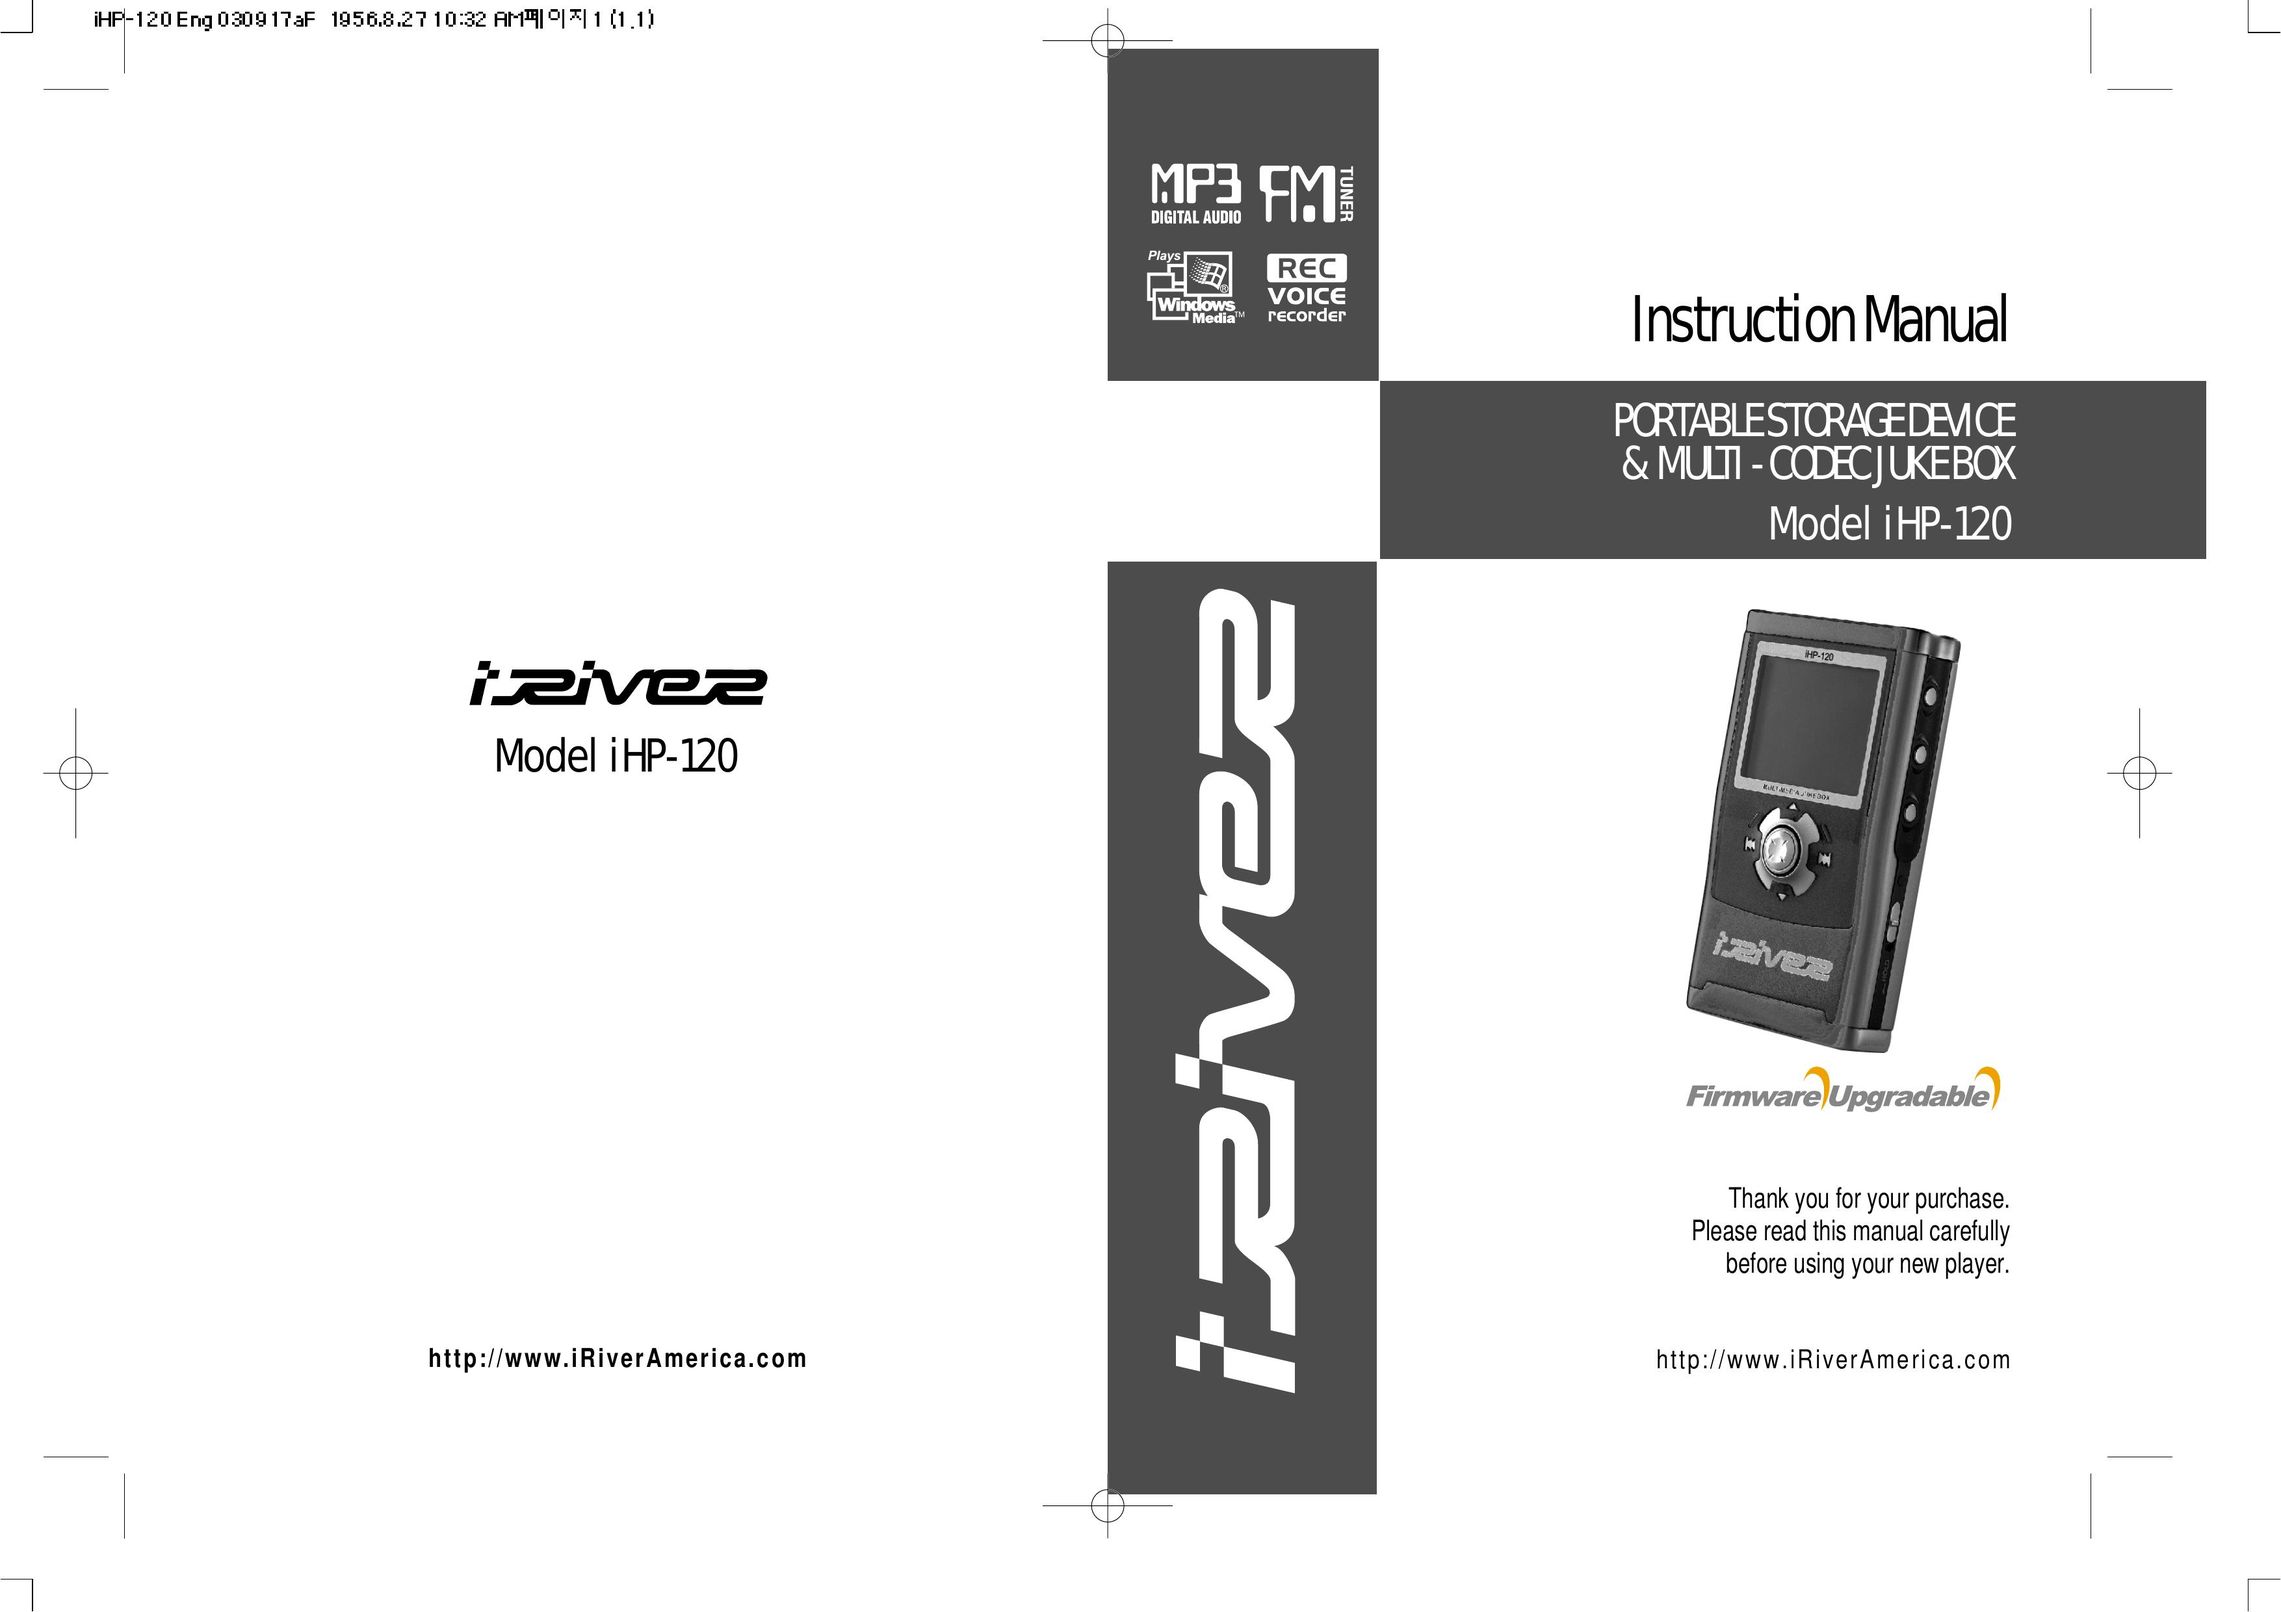 IRiver HP-120 MP3 Player User Manual